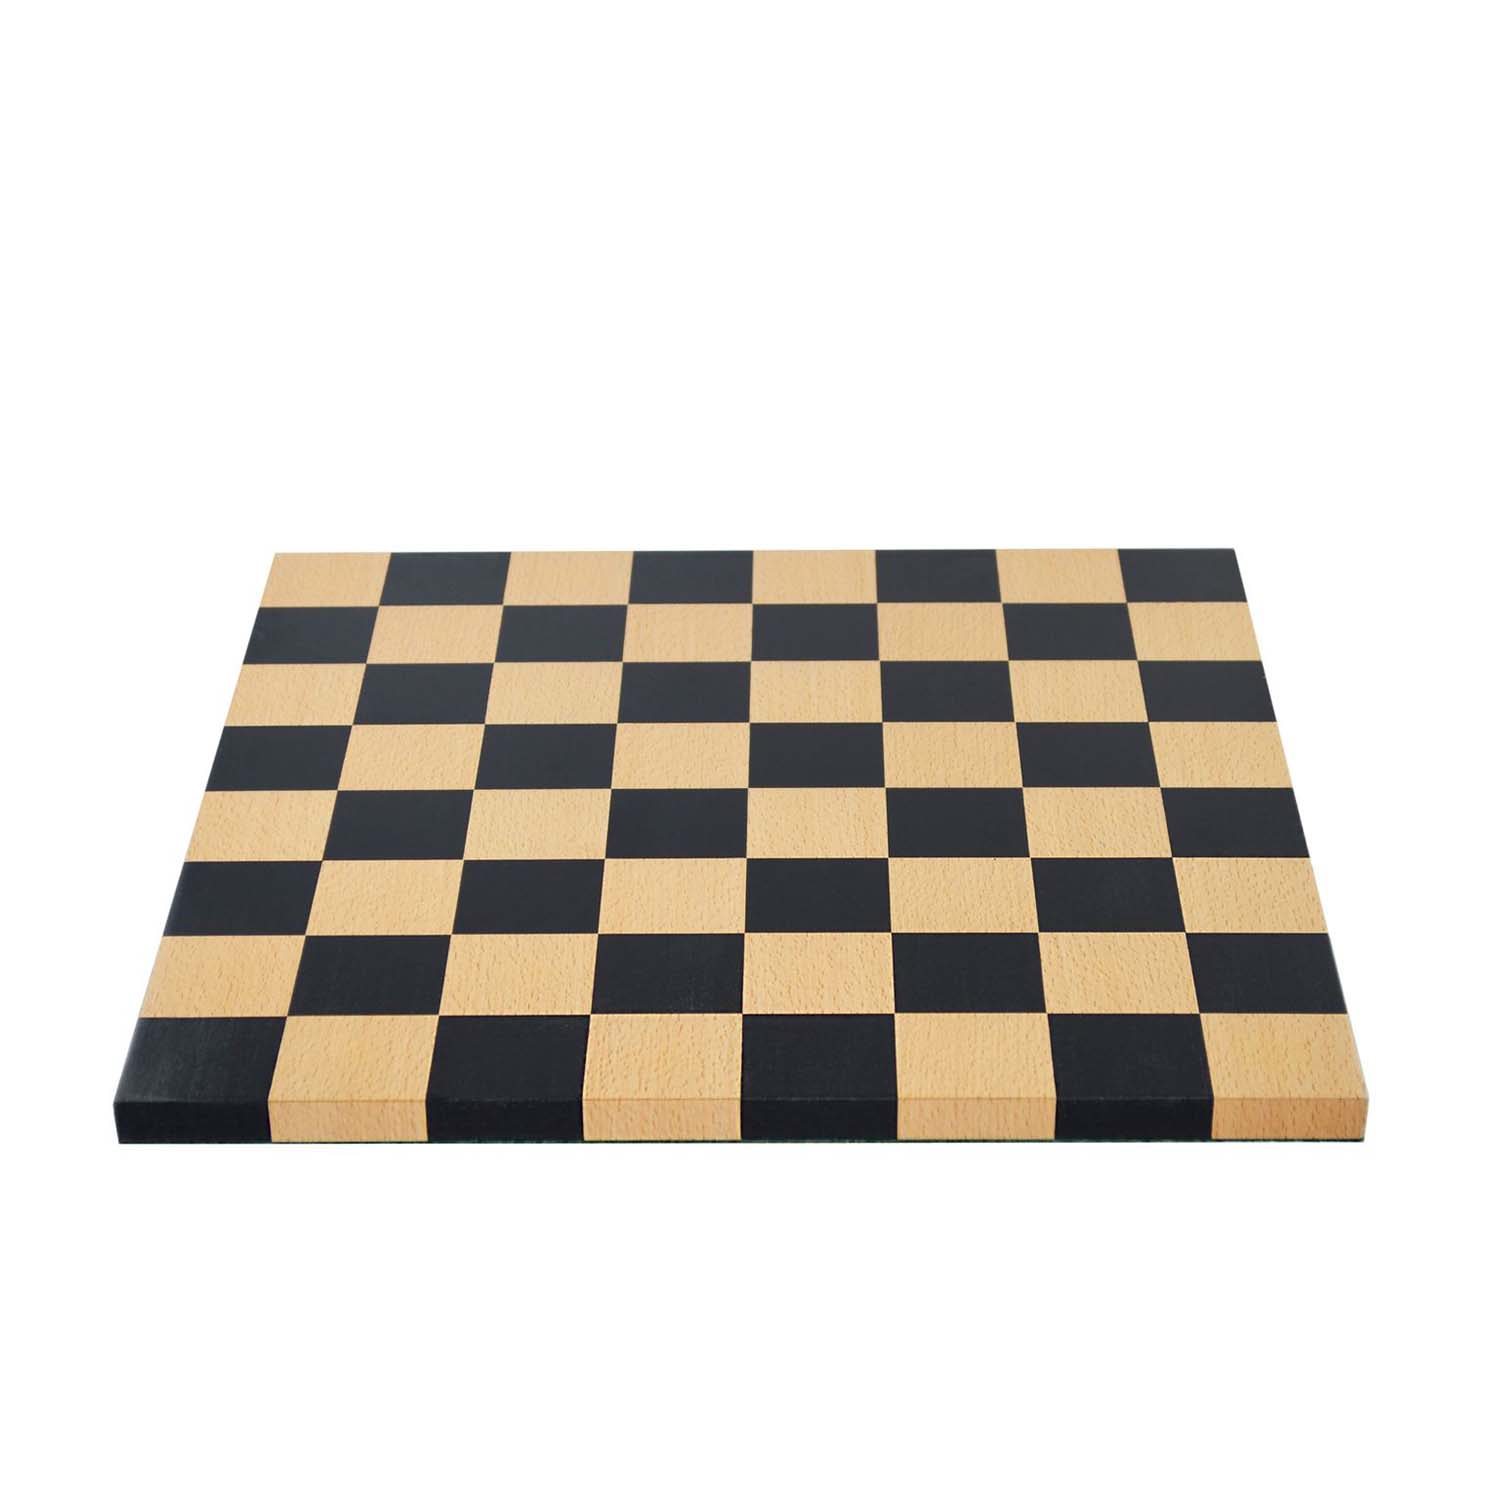 Picture of Man Ray의 체스 판